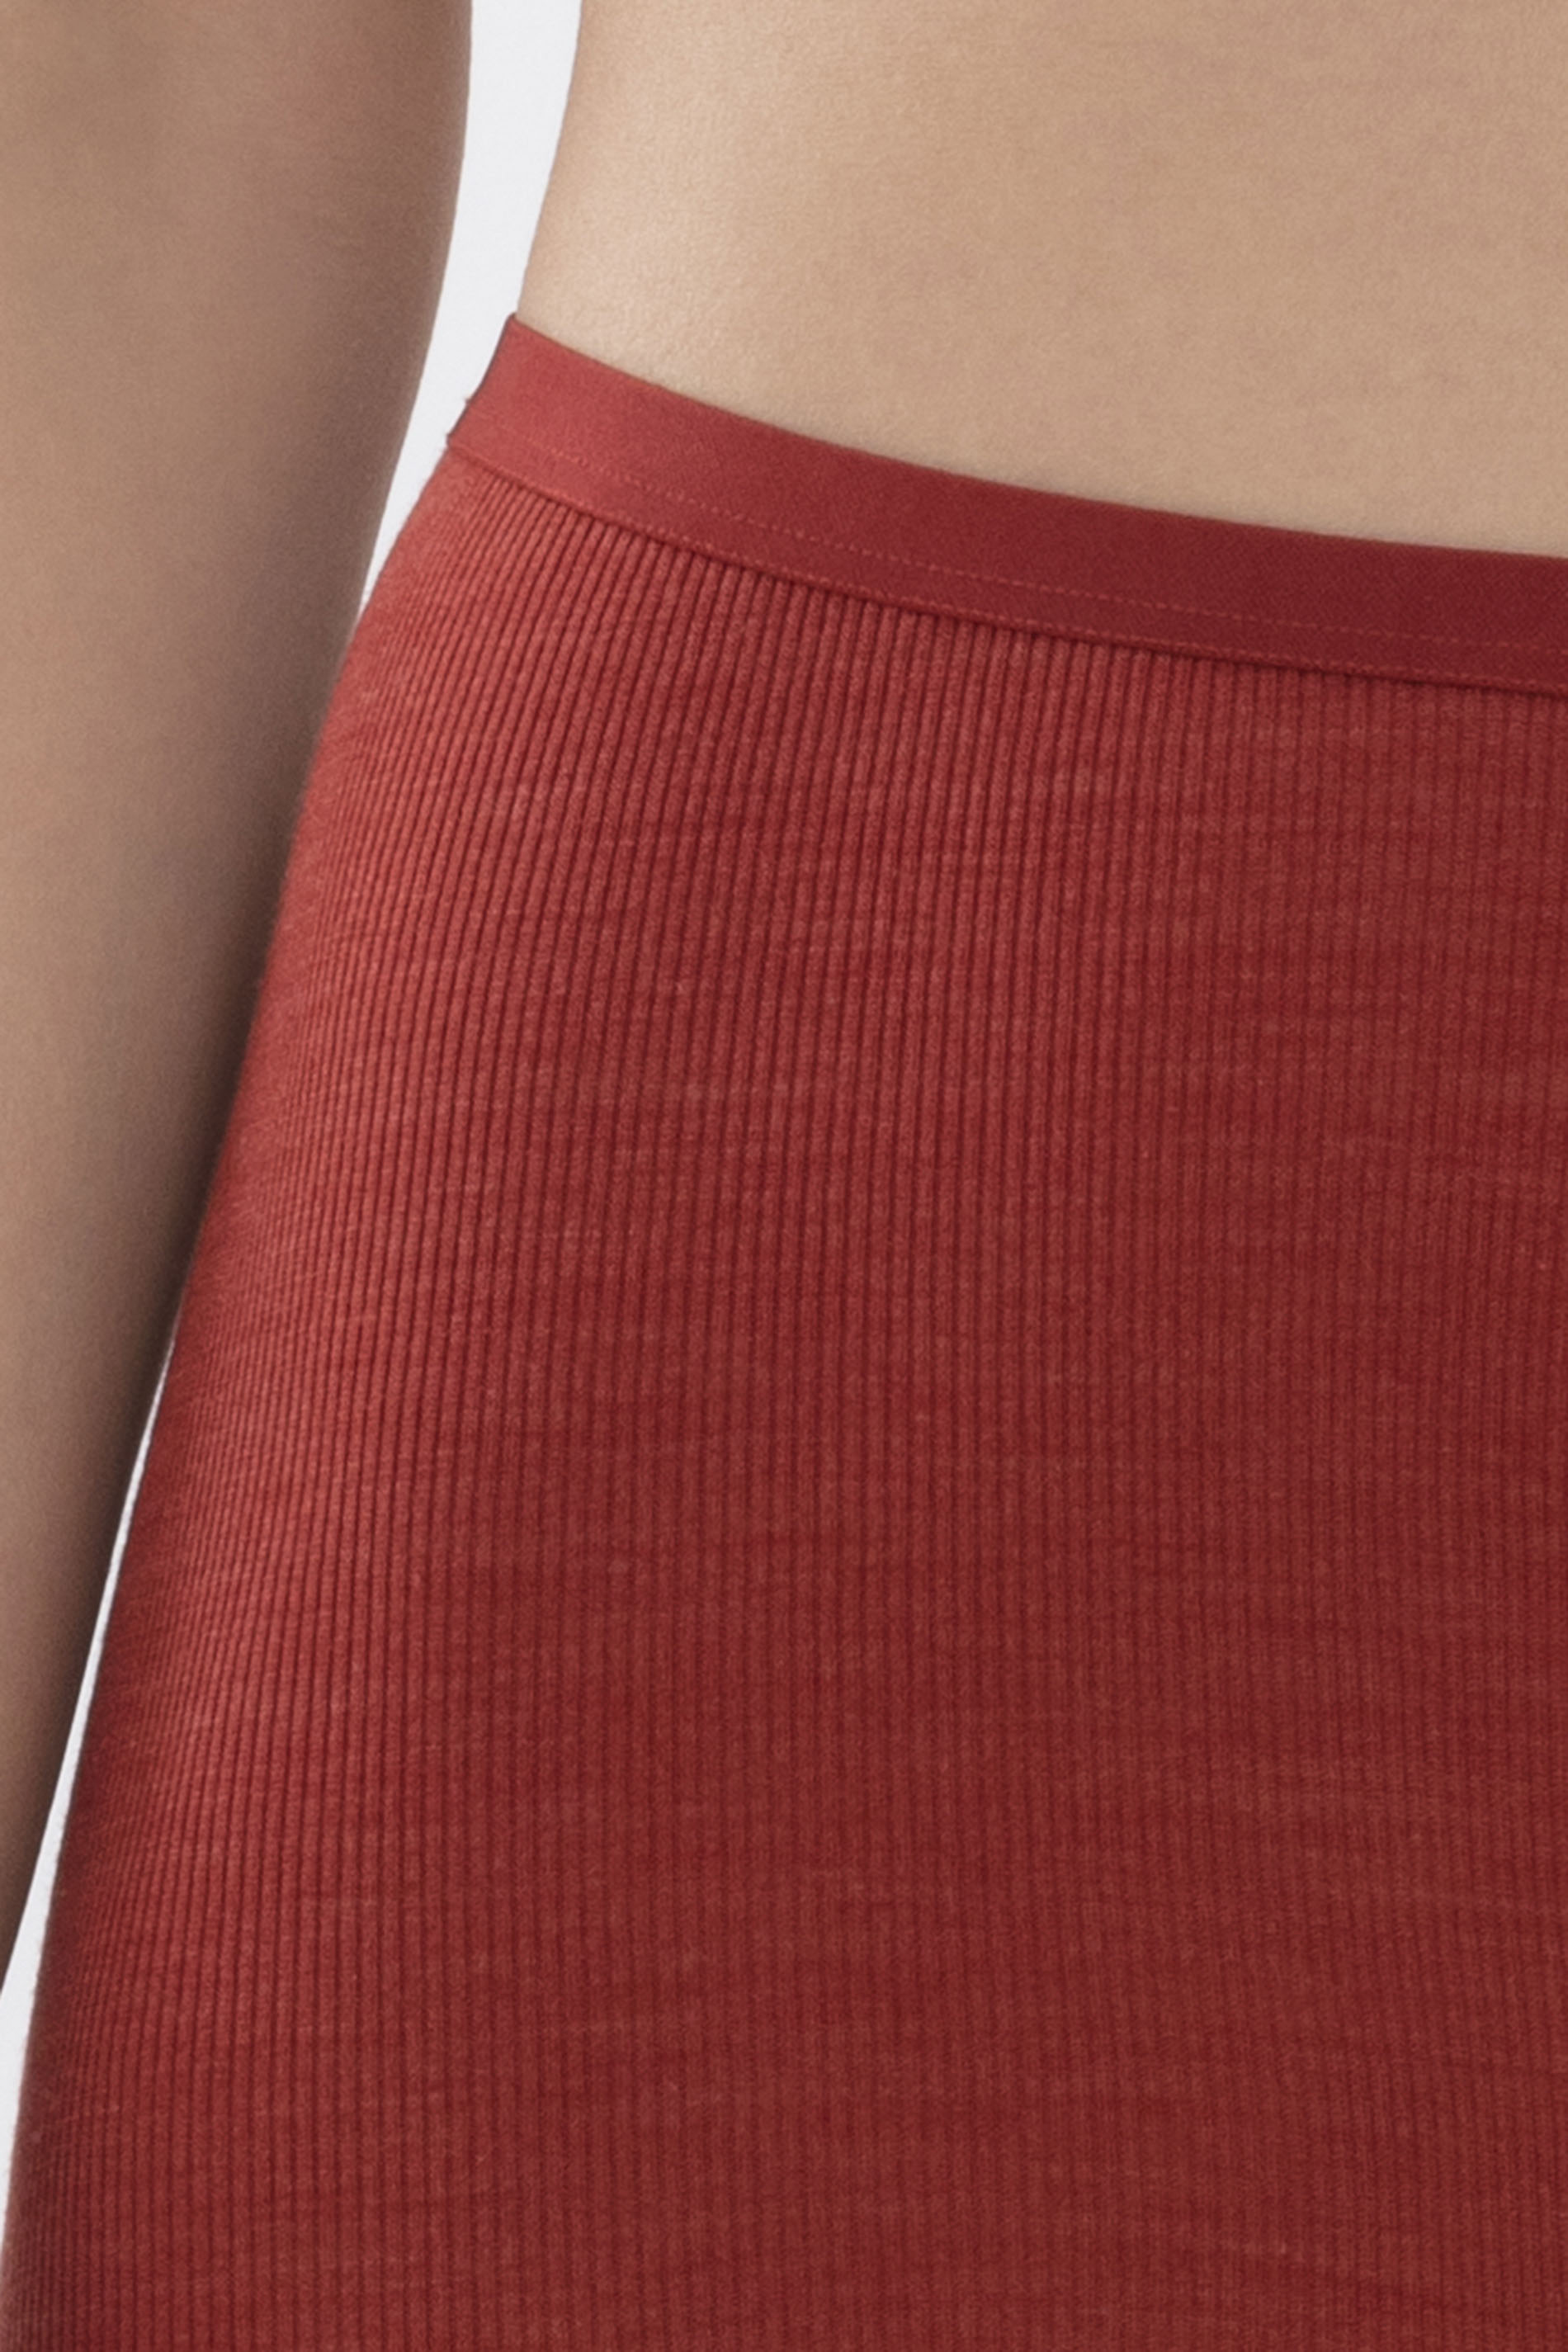 Leggings Red Pepper Serie Silk Rib Wool Detail View 01 | mey®